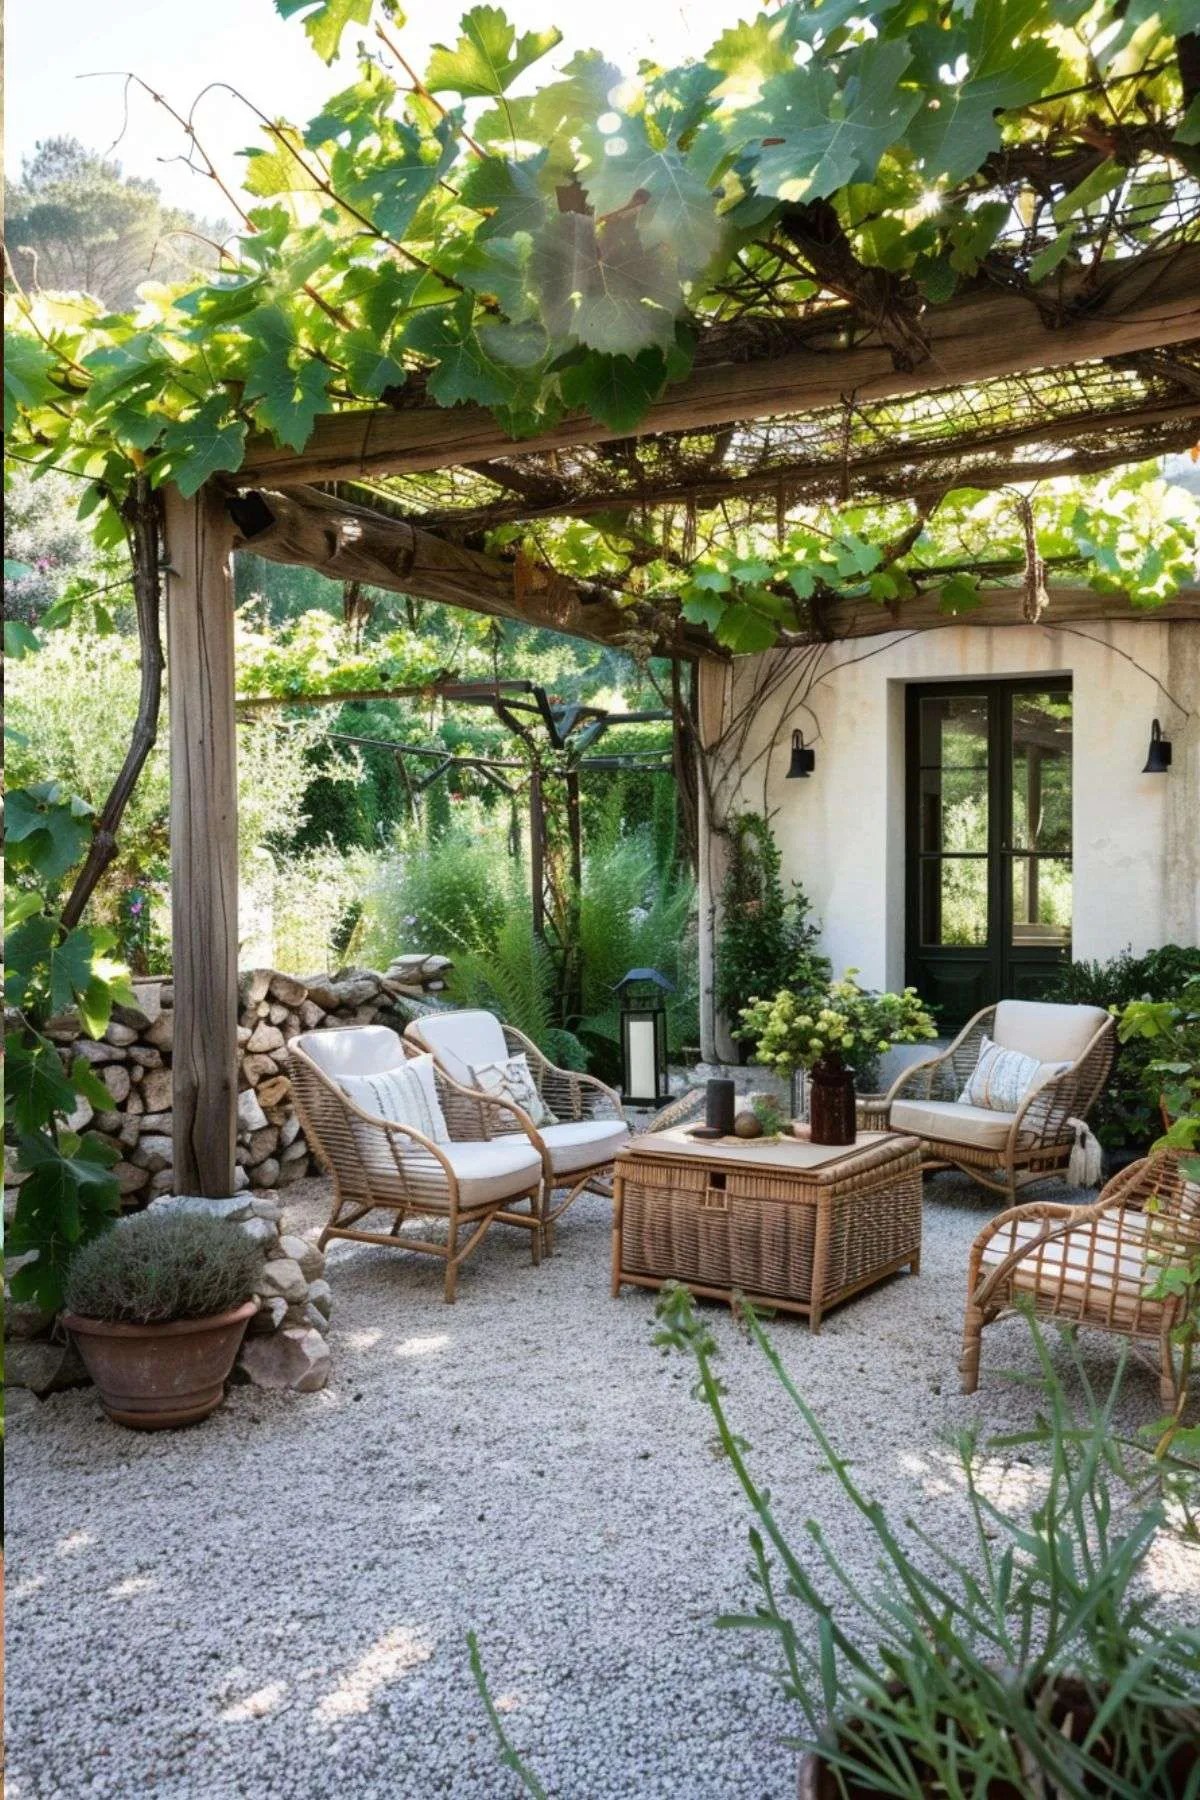 10 Mediterranean Garden Ideas – Plants, Decor and Cozy Settings